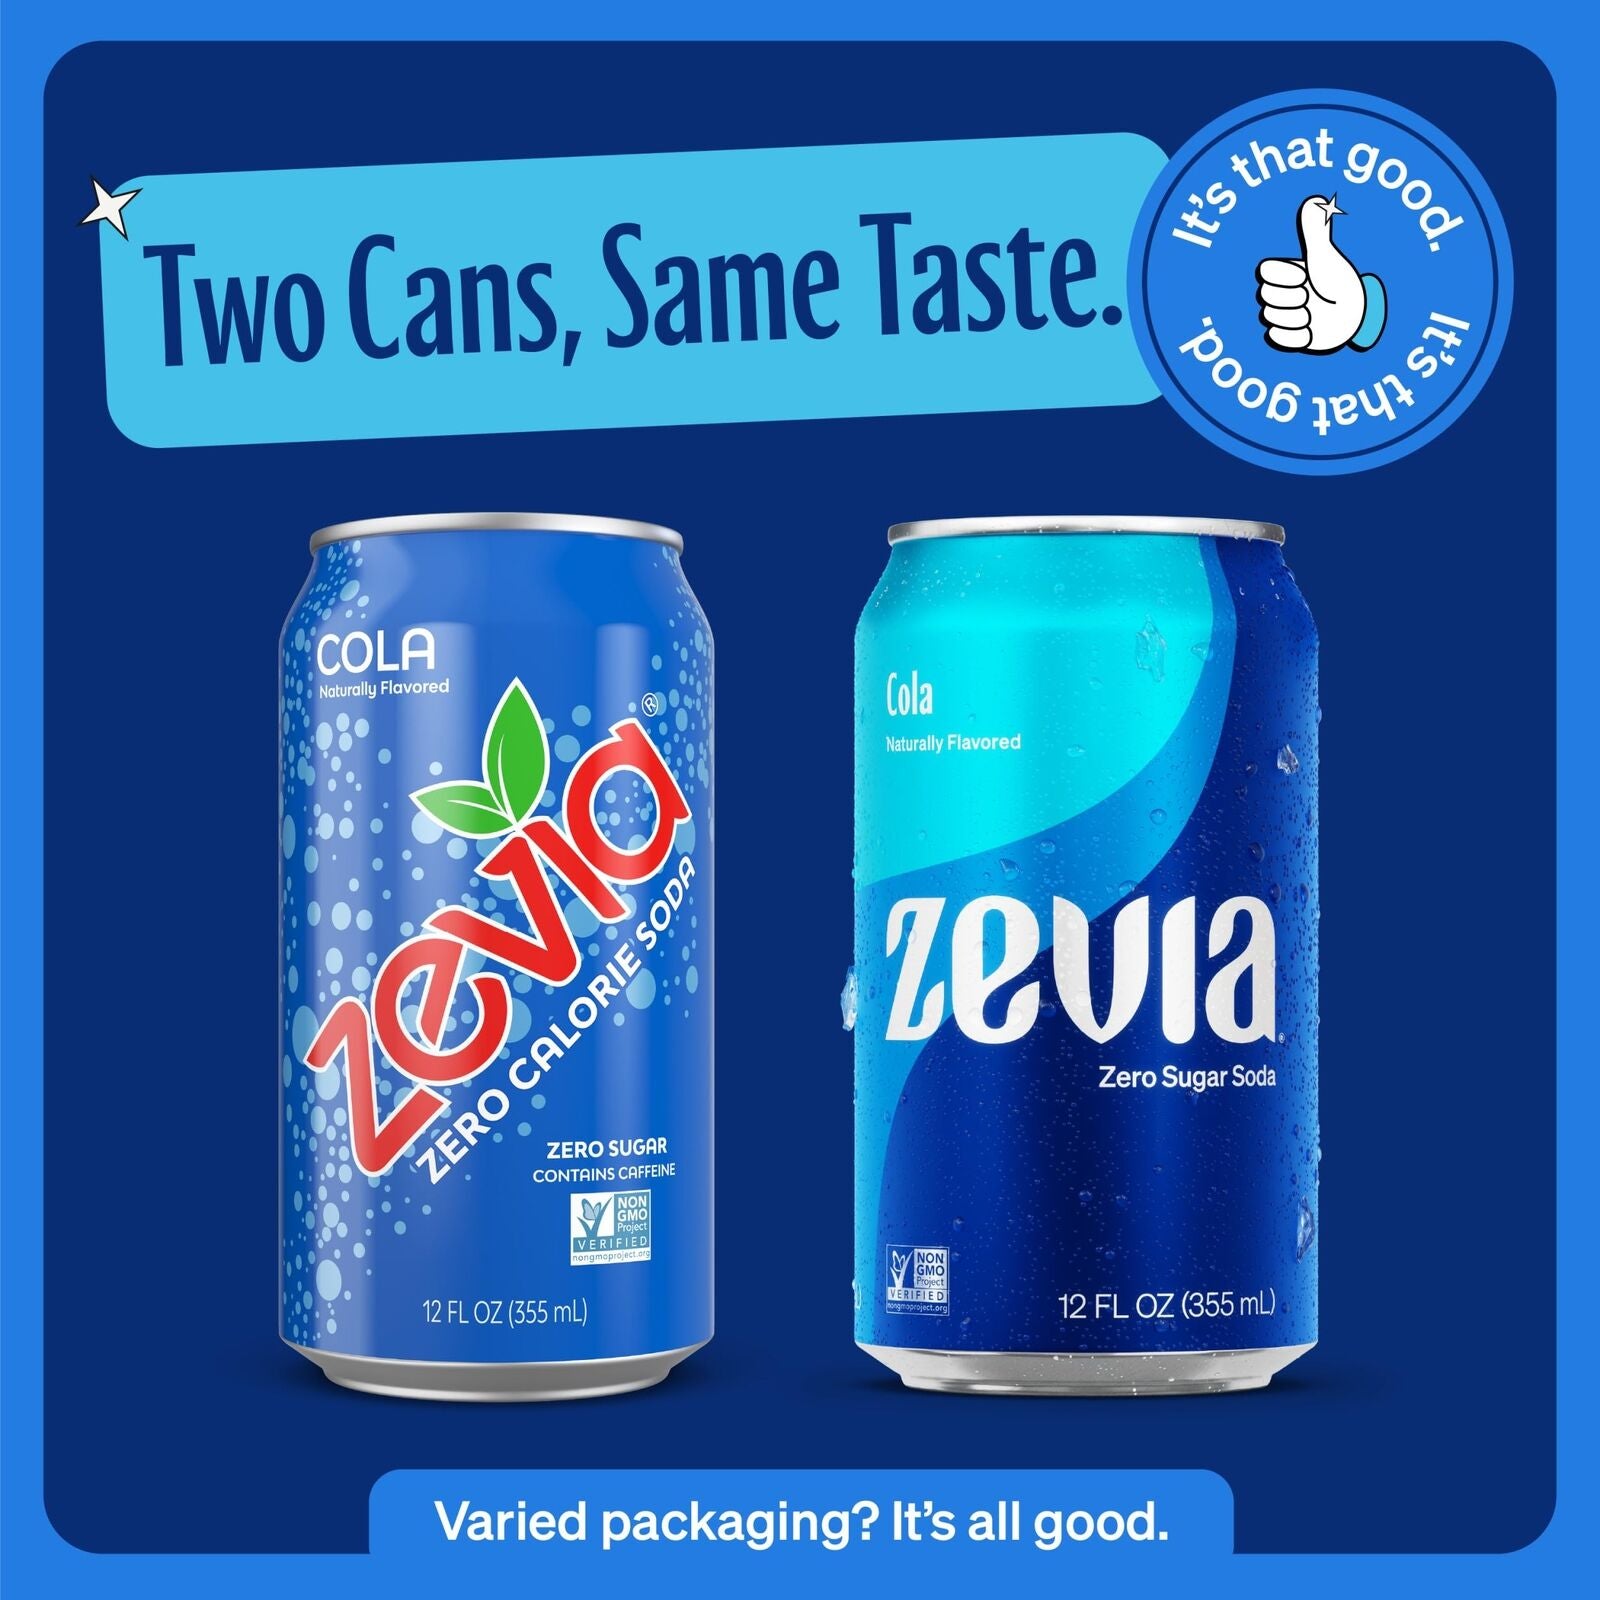 Zevia Zero Calorie Soda Cola, 12 Ounce Cans (Pack of 24)